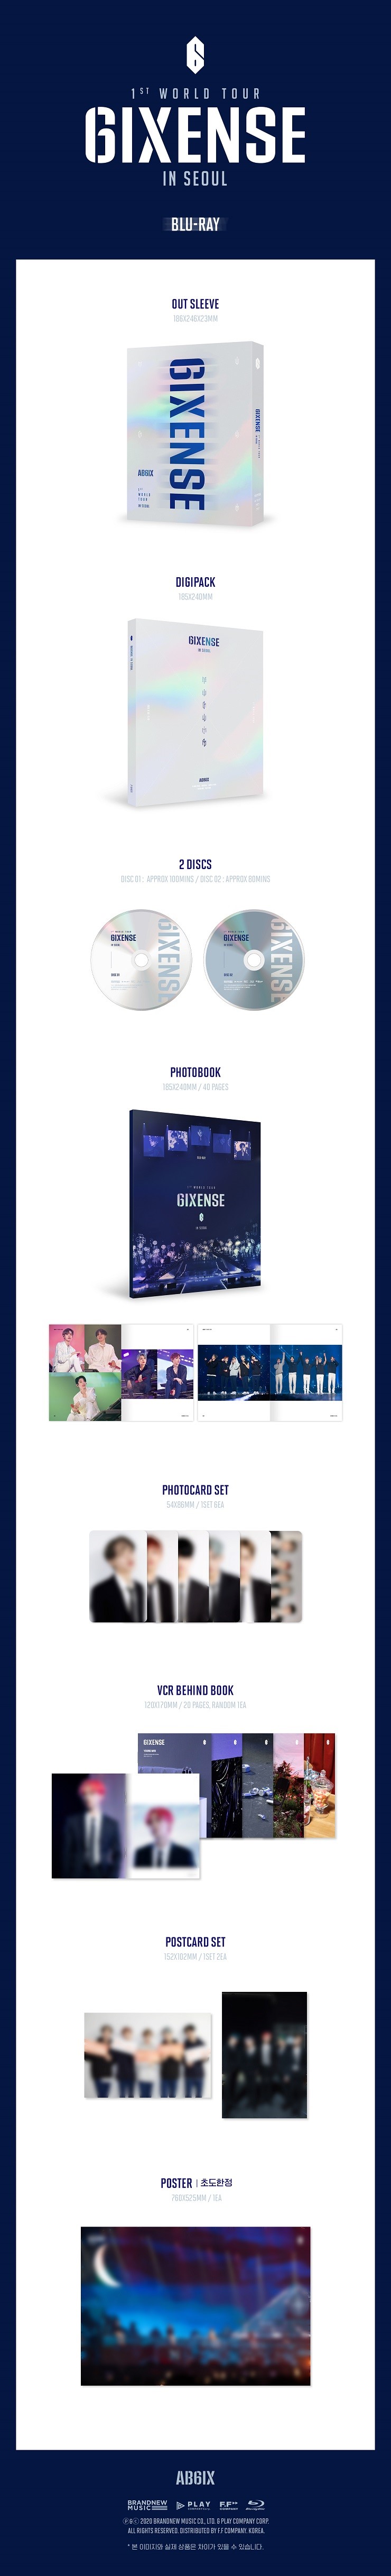 AB6IX(에이비식스) - 1st World Tour 6IXENSE In Seoul Blu-ray